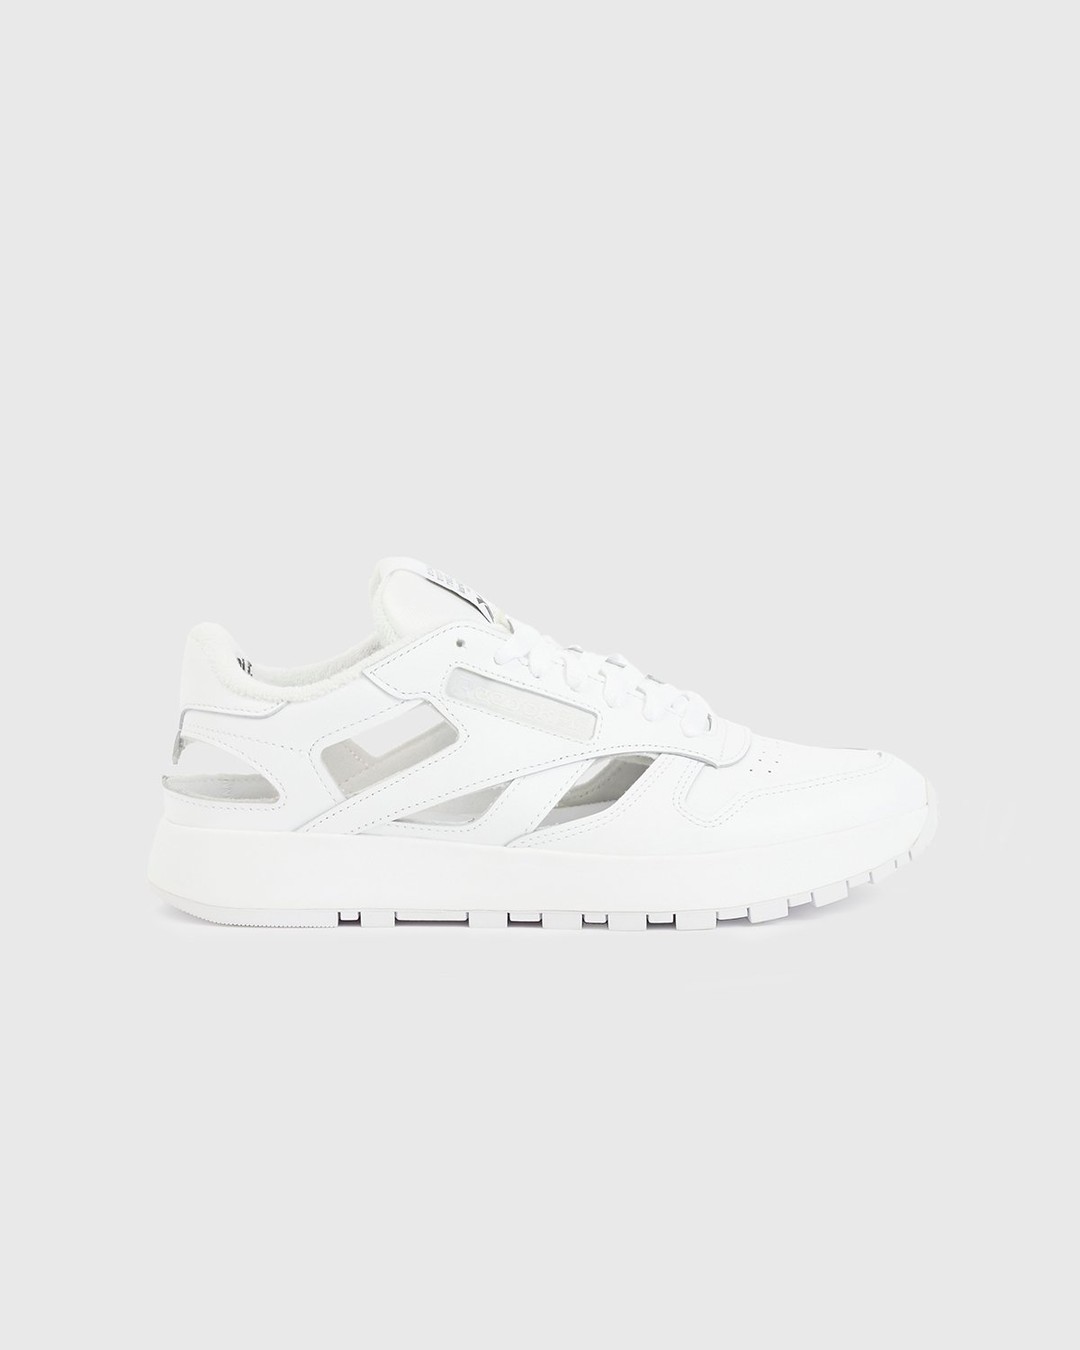 Maison Margiela x Reebok – Classic Leather Tabi Low White - Low Top Sneakers - White - Image 1